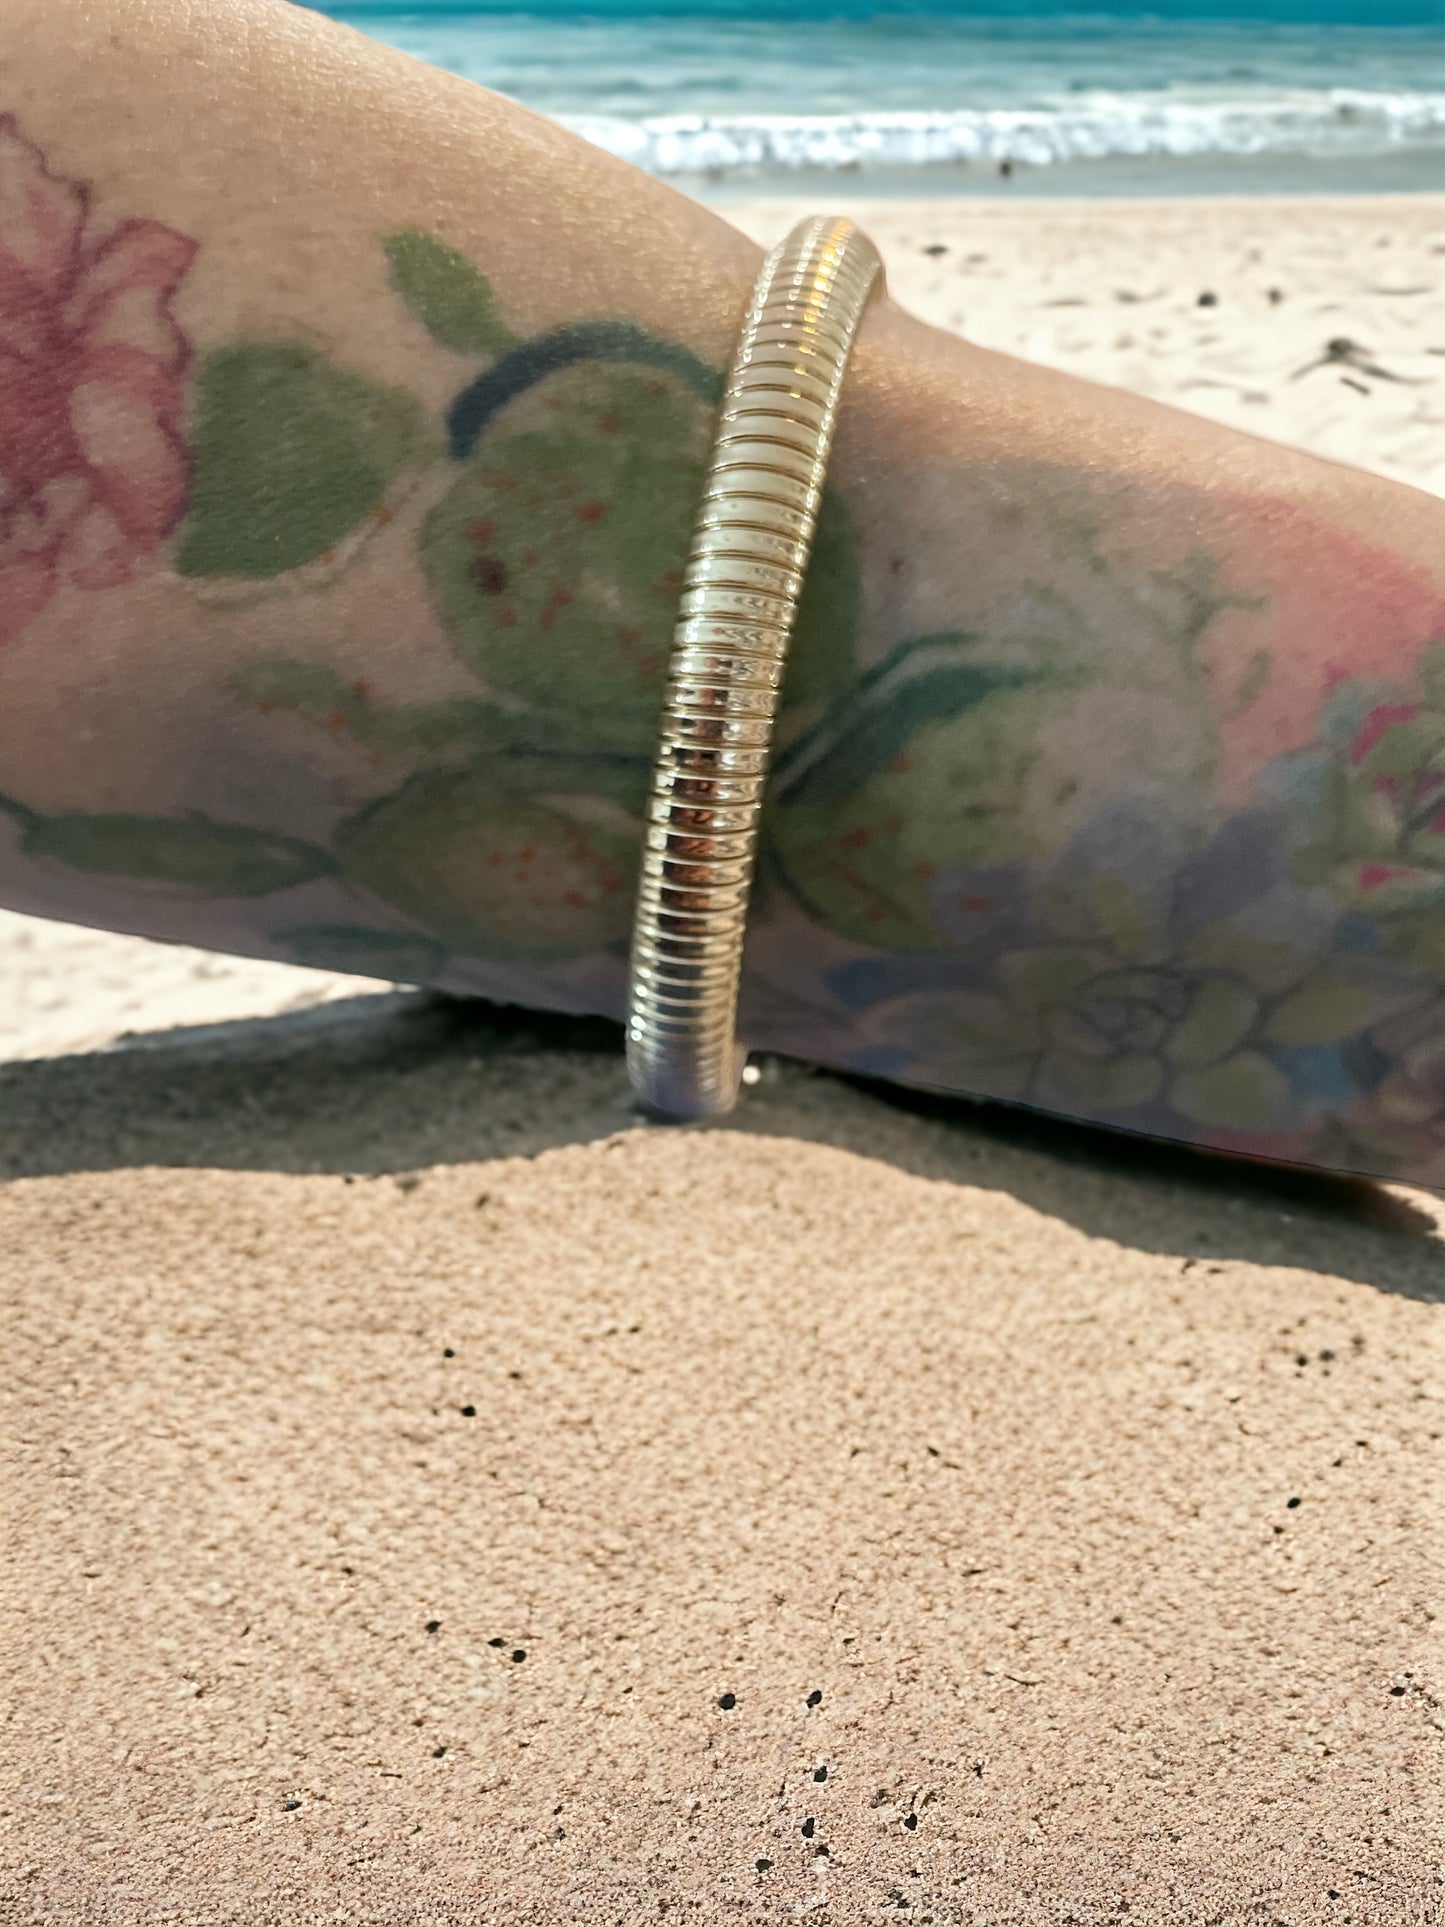 Gold Tone Snake Chain Stretch Bangle Bracelet-Small